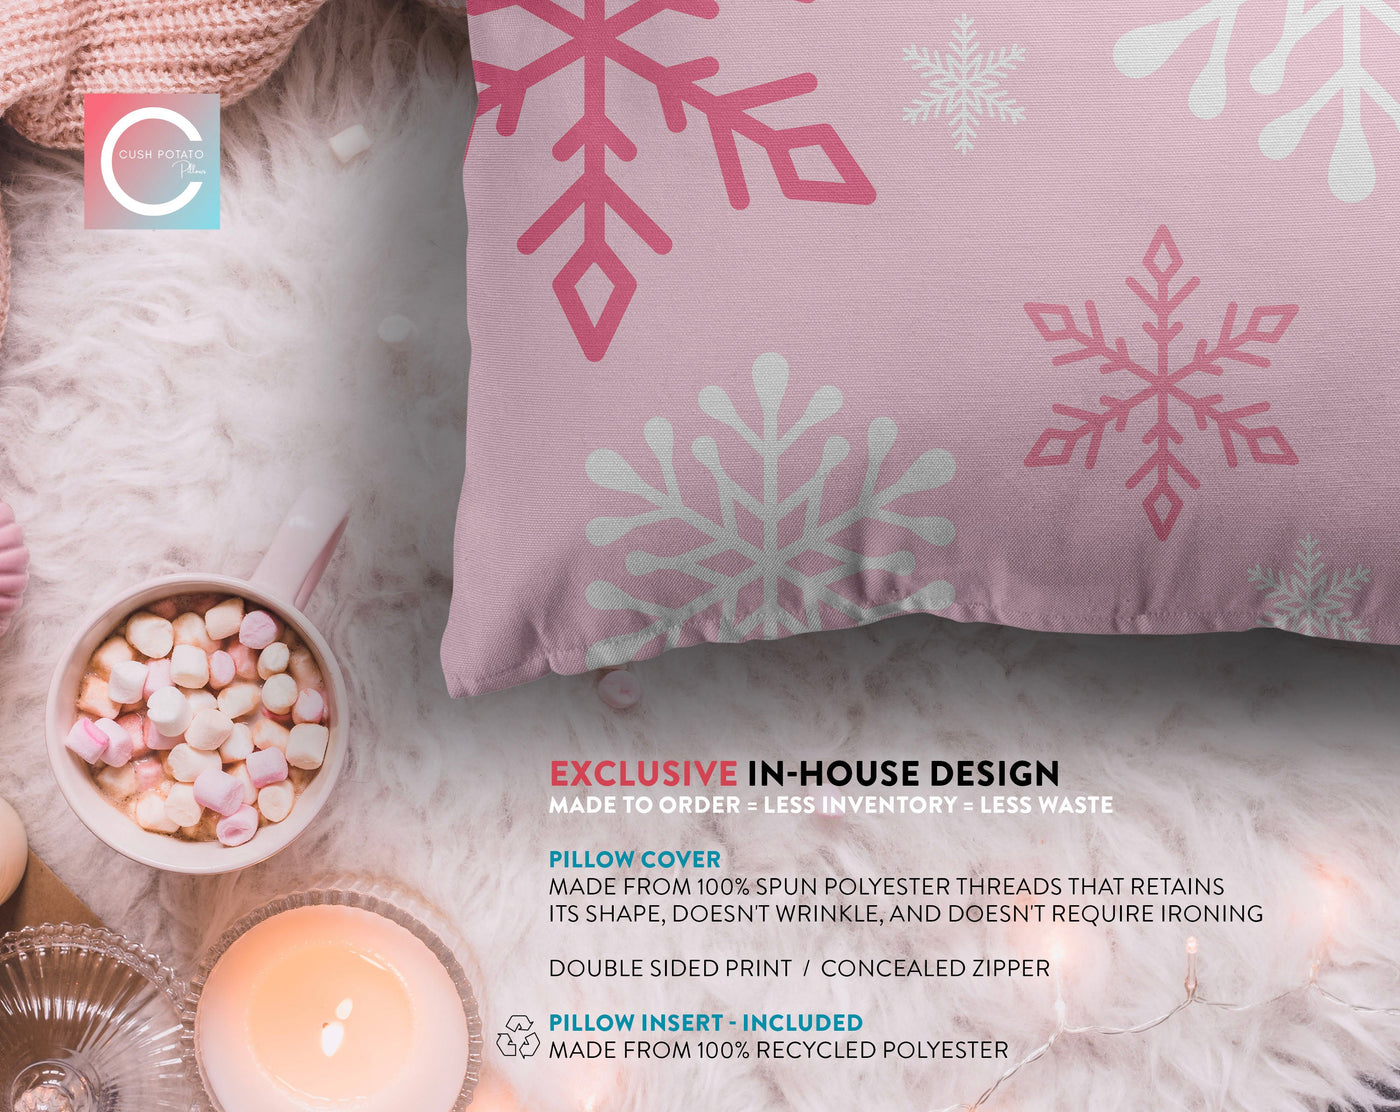 Enchanted Snowflakes Winter Christmas Pink Pillow Throw - Cush Potato Pillows